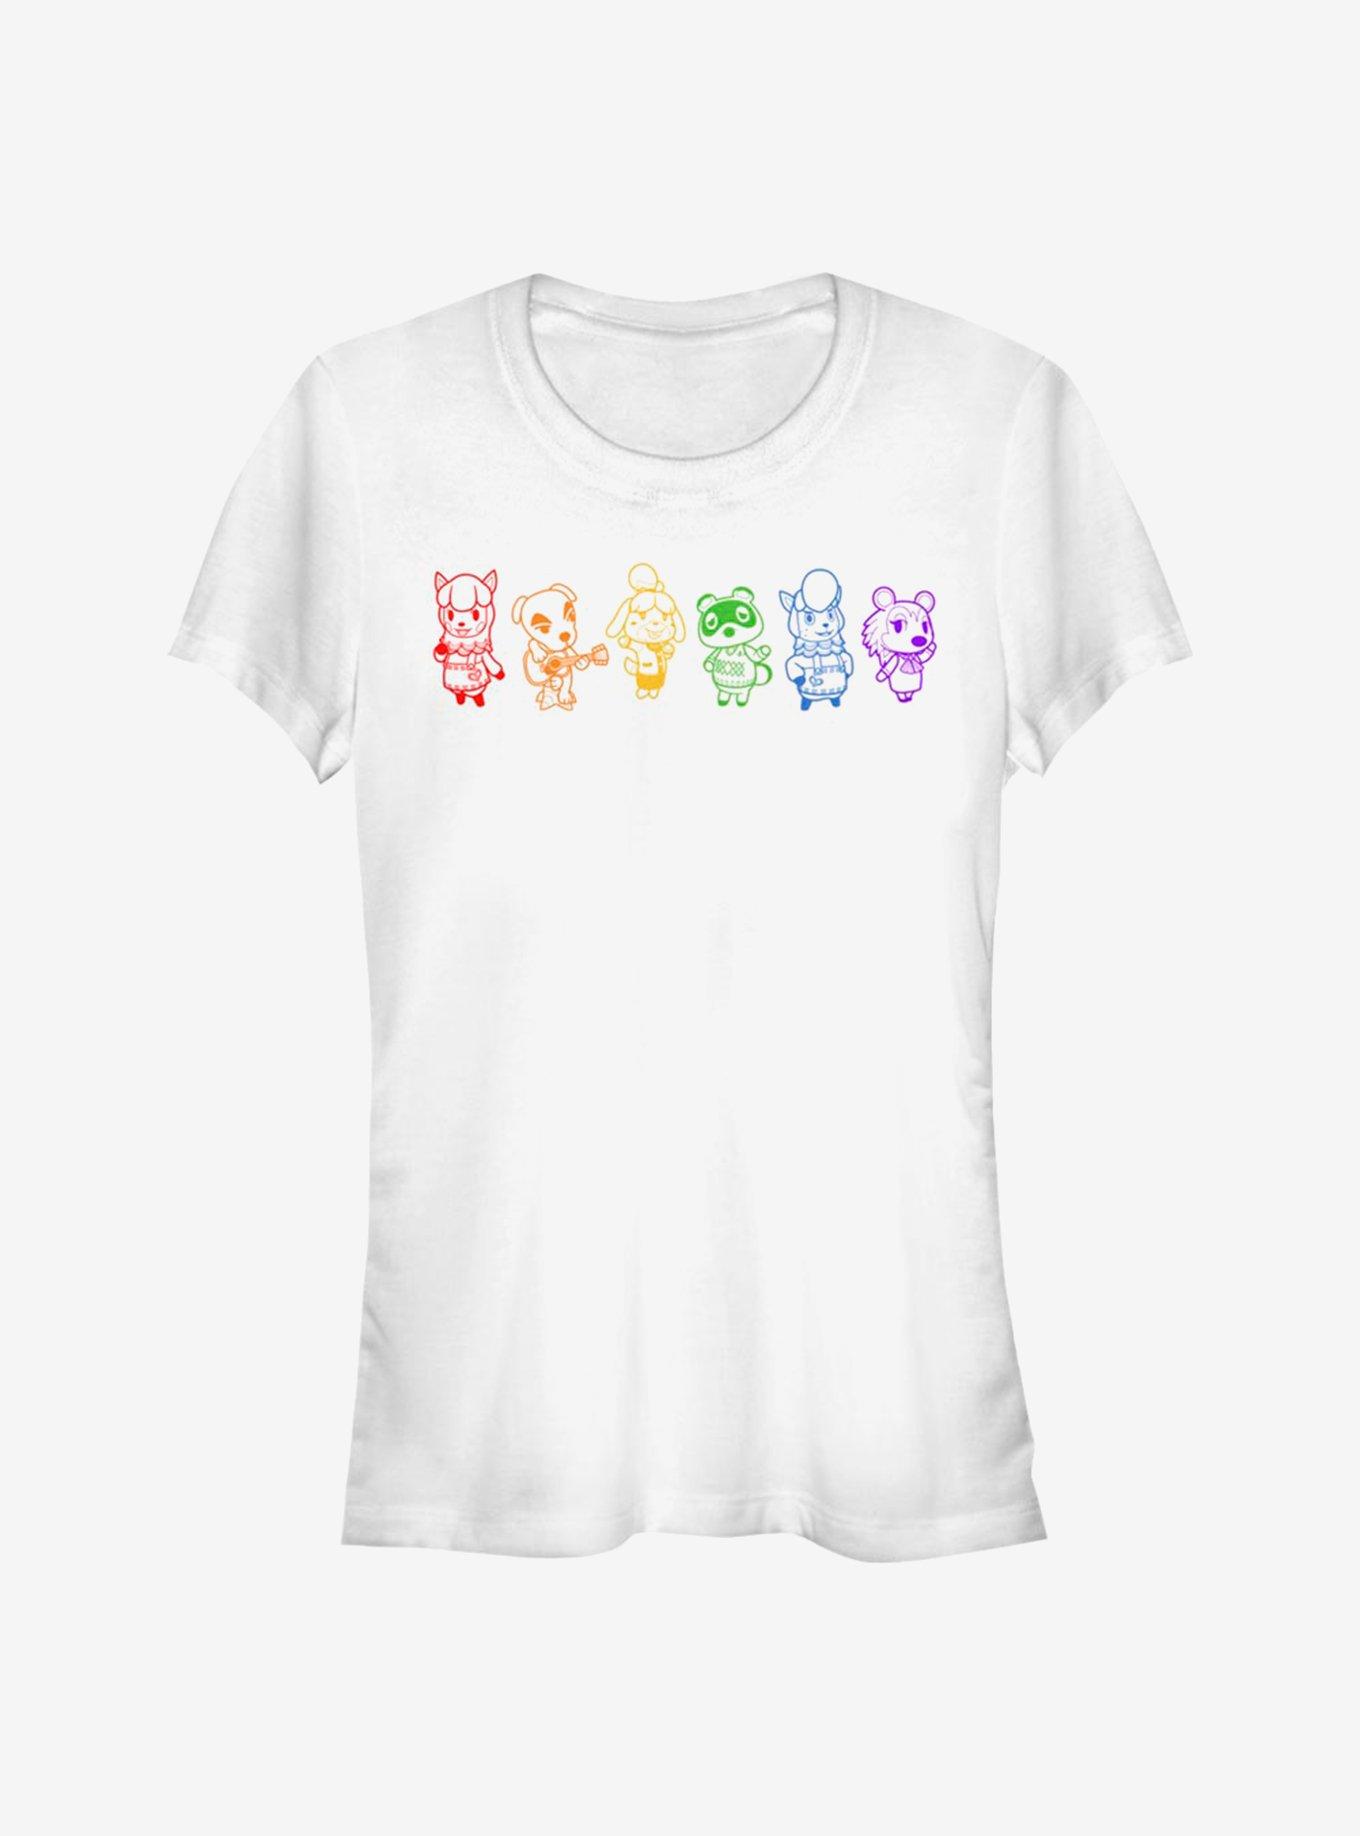 Animal Crossing Line Art Rainbow Girls T-Shirt, WHITE, hi-res